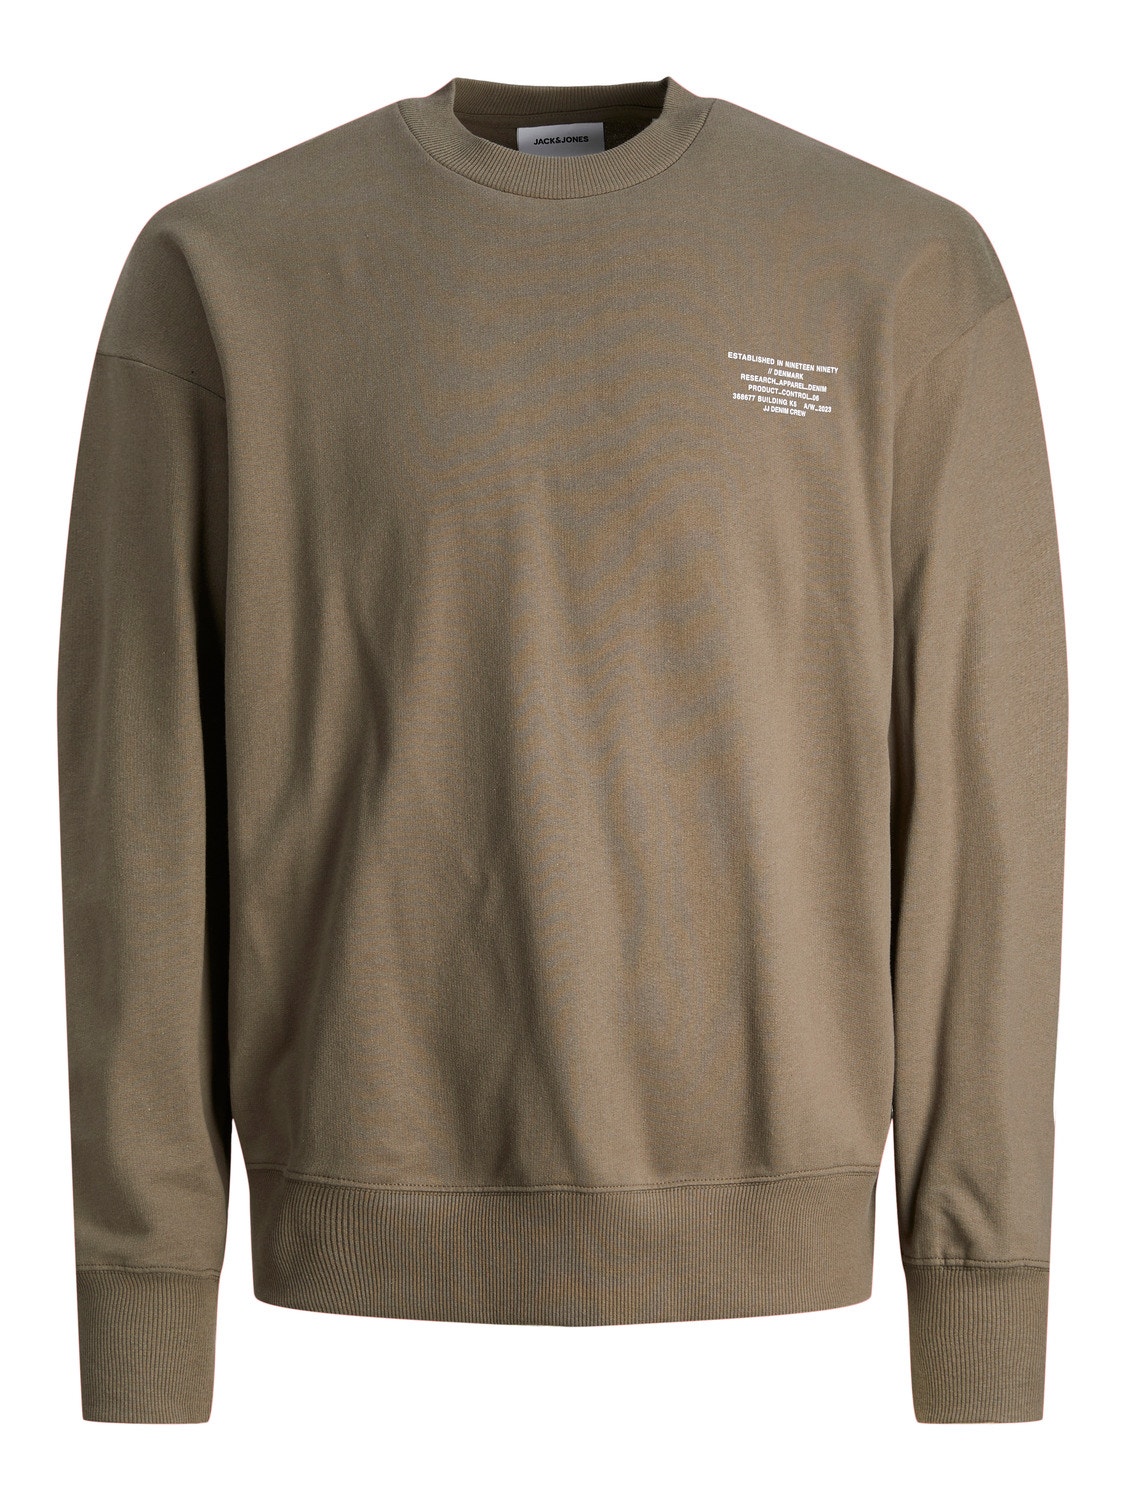 Jack & Jones Printed Crewn Neck Sweatshirt -Bungee Cord - 12250647